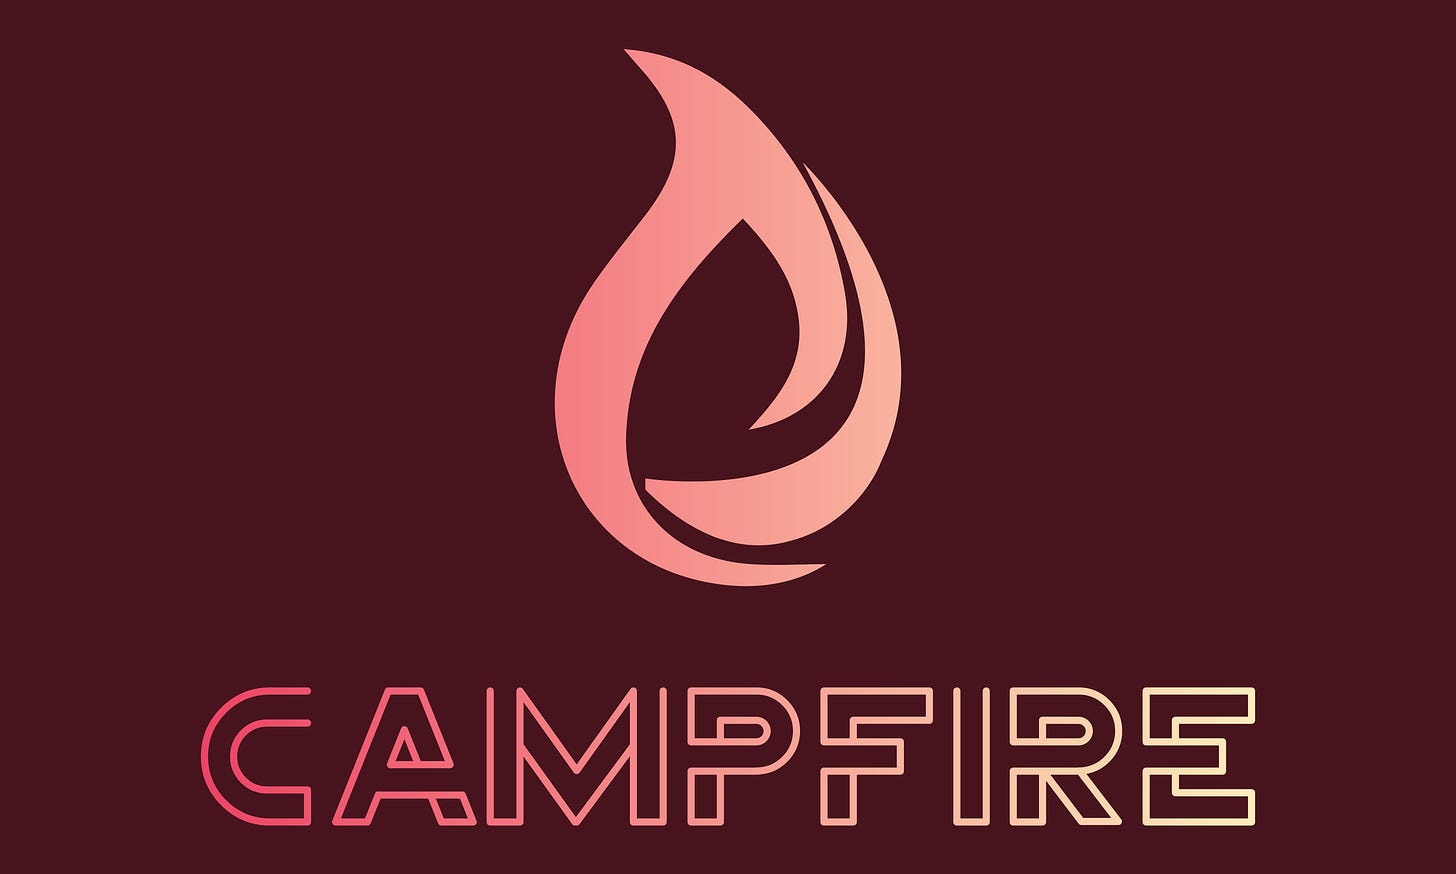 Introducing Campfire